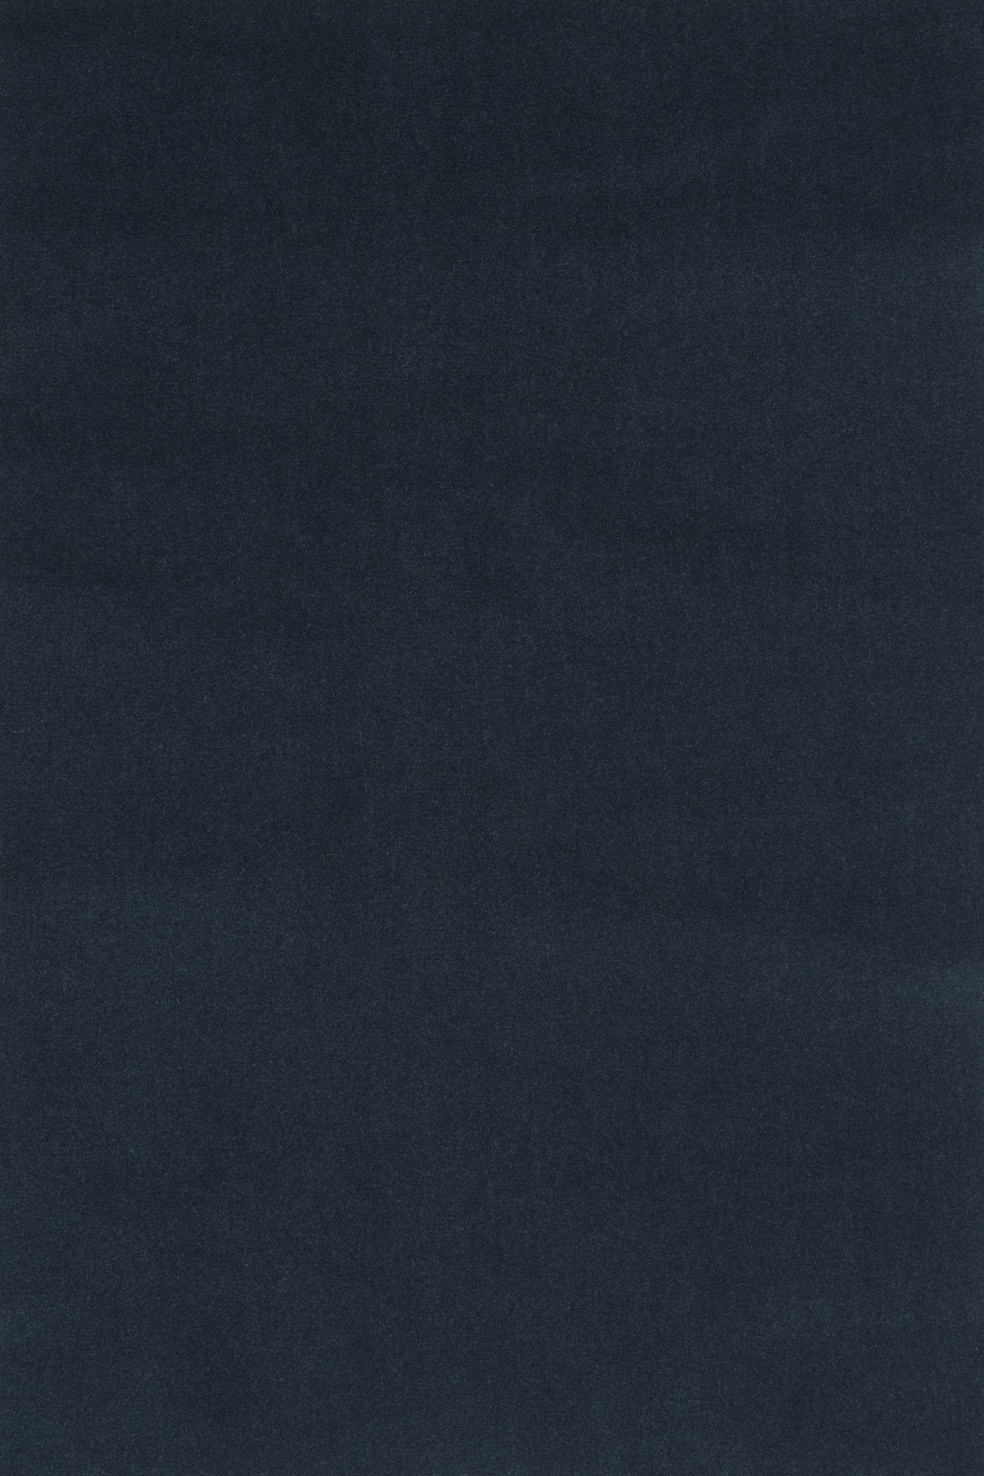 Fabric sample Harald 3 182 grey